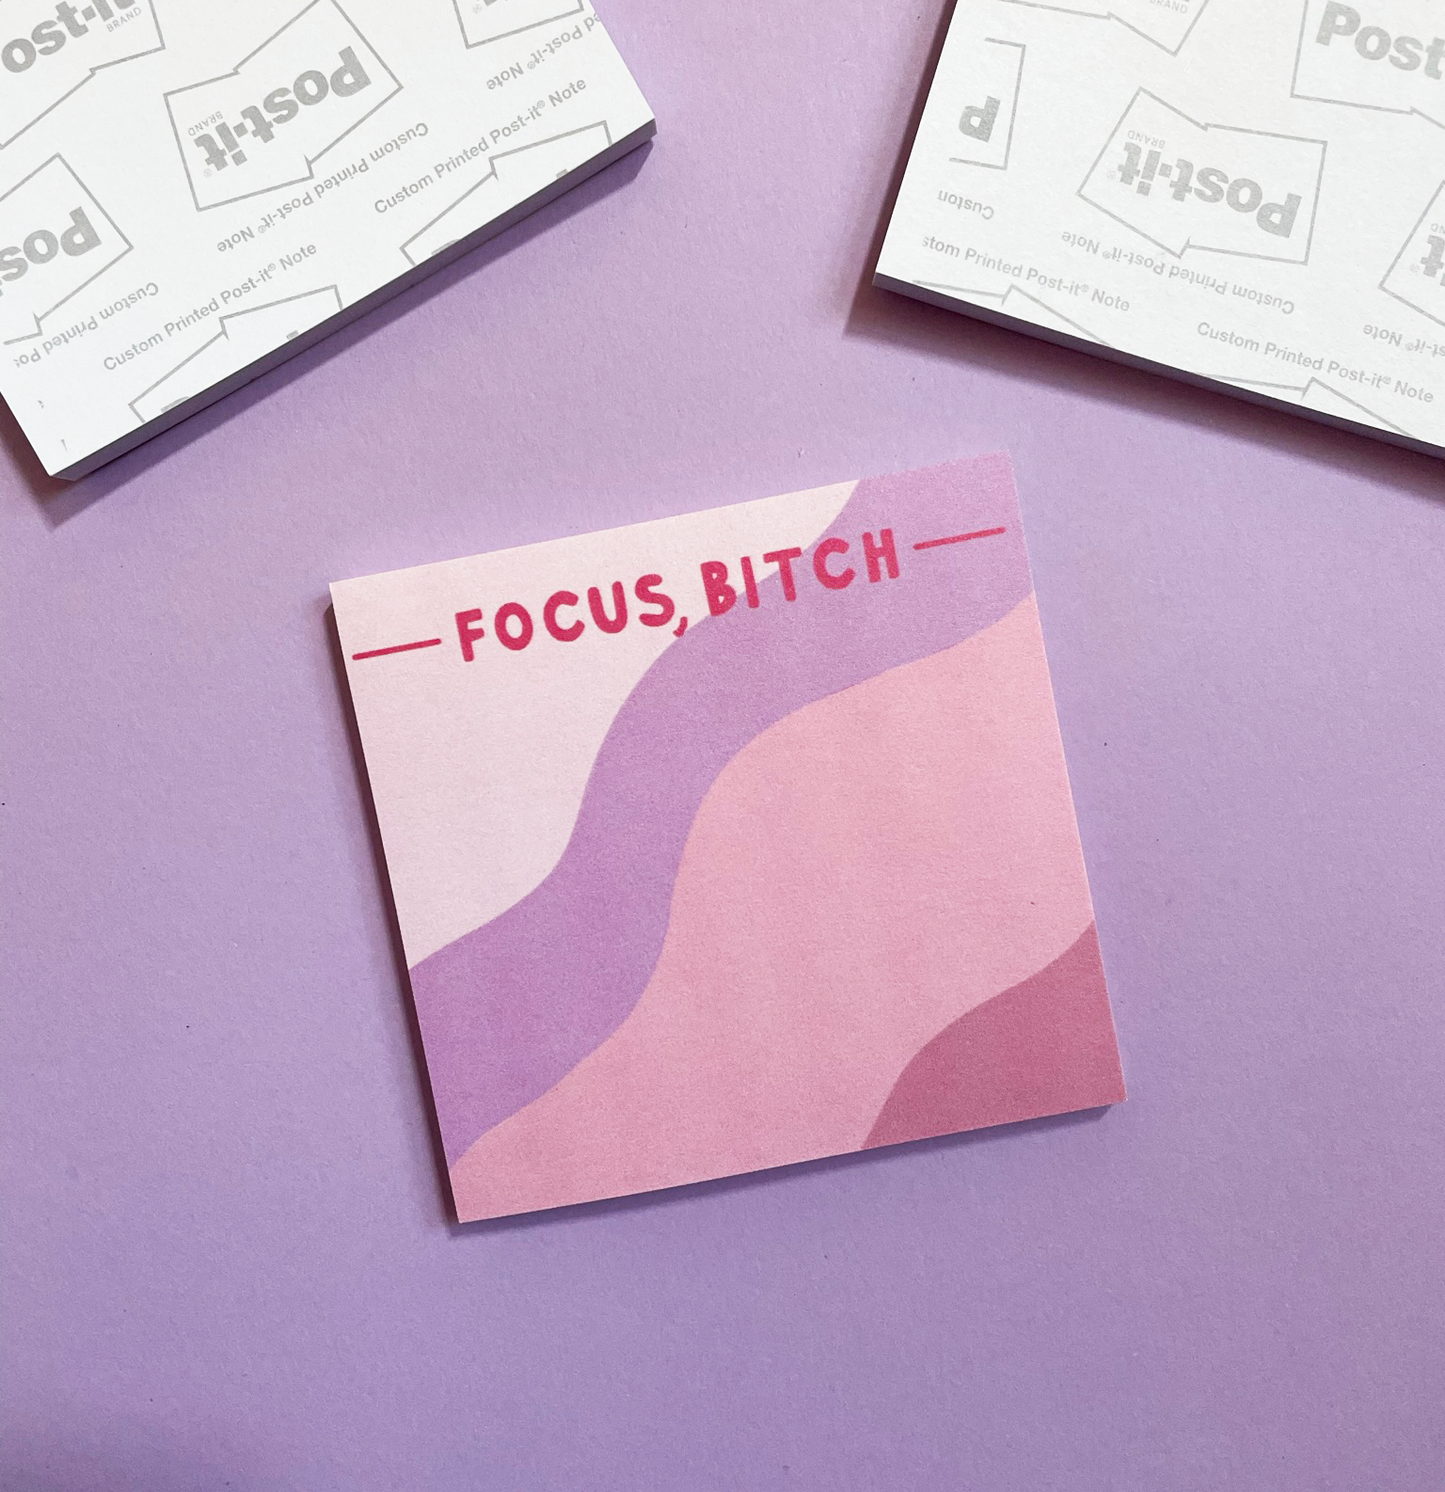 Focus, Bitch - Sticky Notes